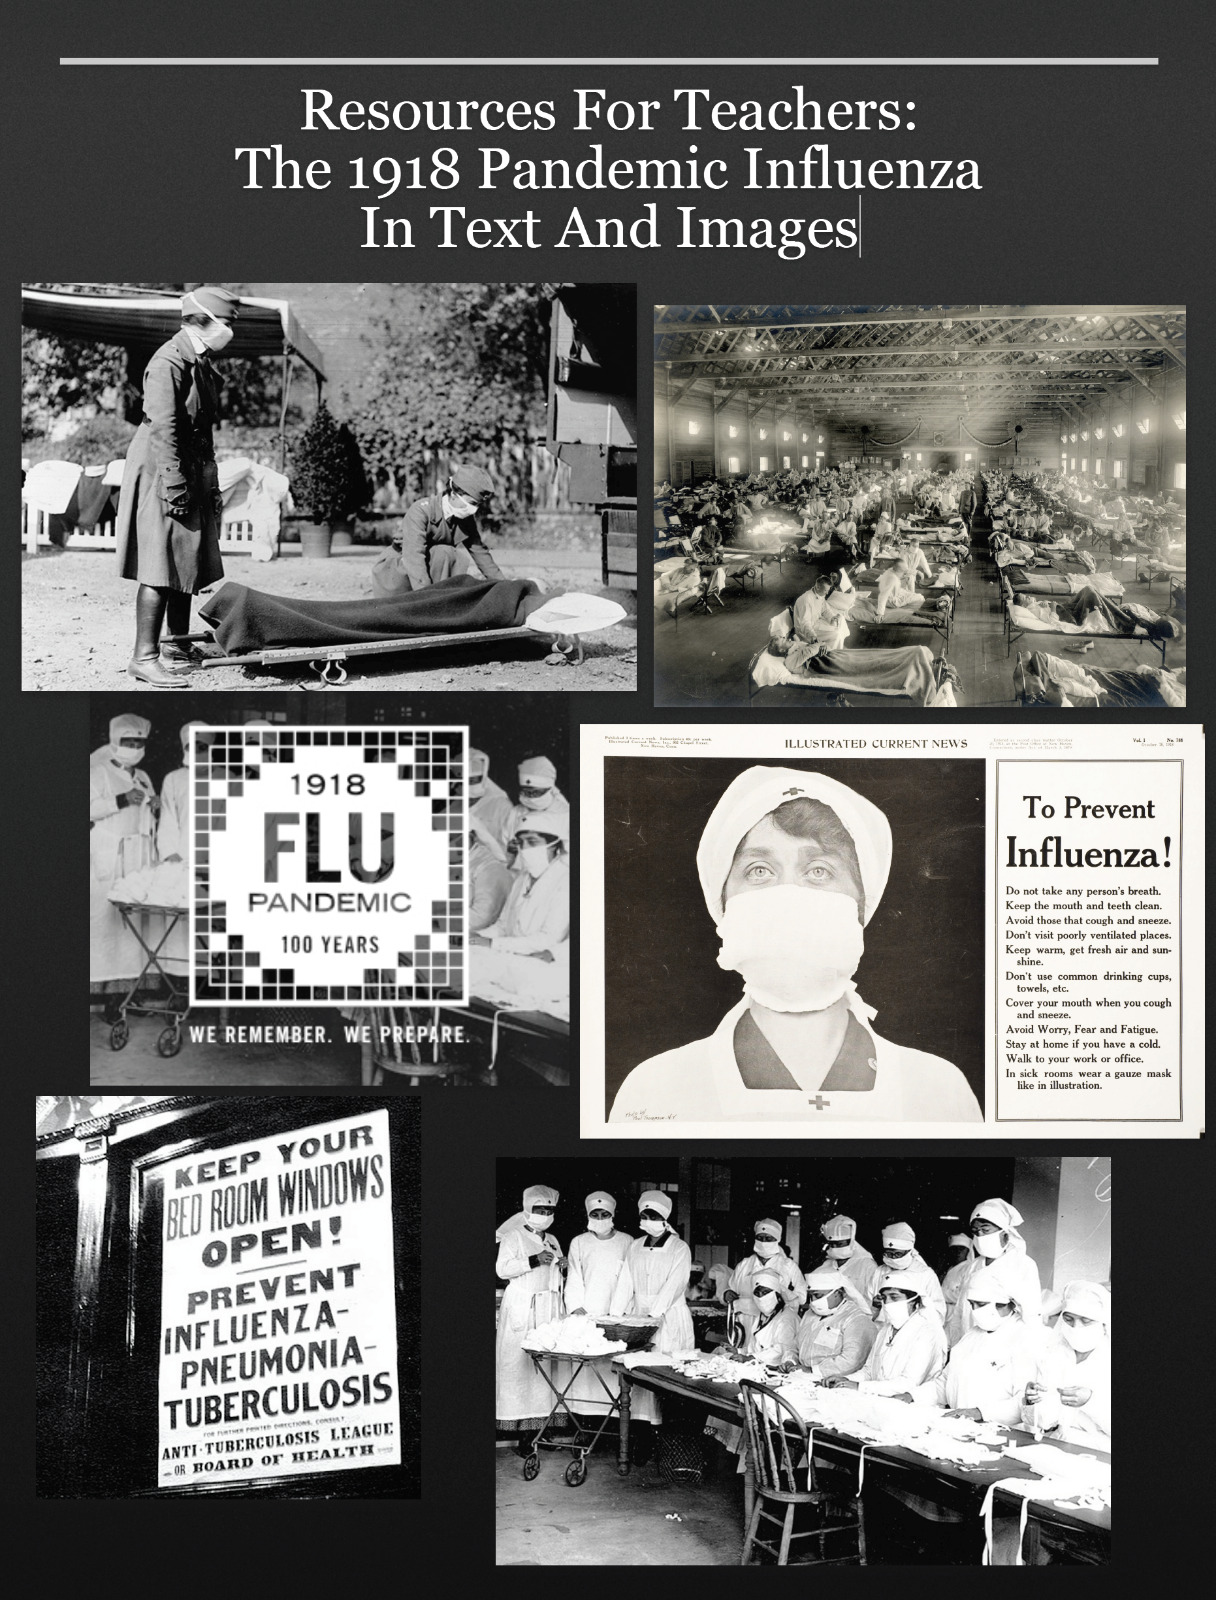 586 Page 1918 Spanish Flu Pandemic Influenza Teacher Resources Book on Data CD